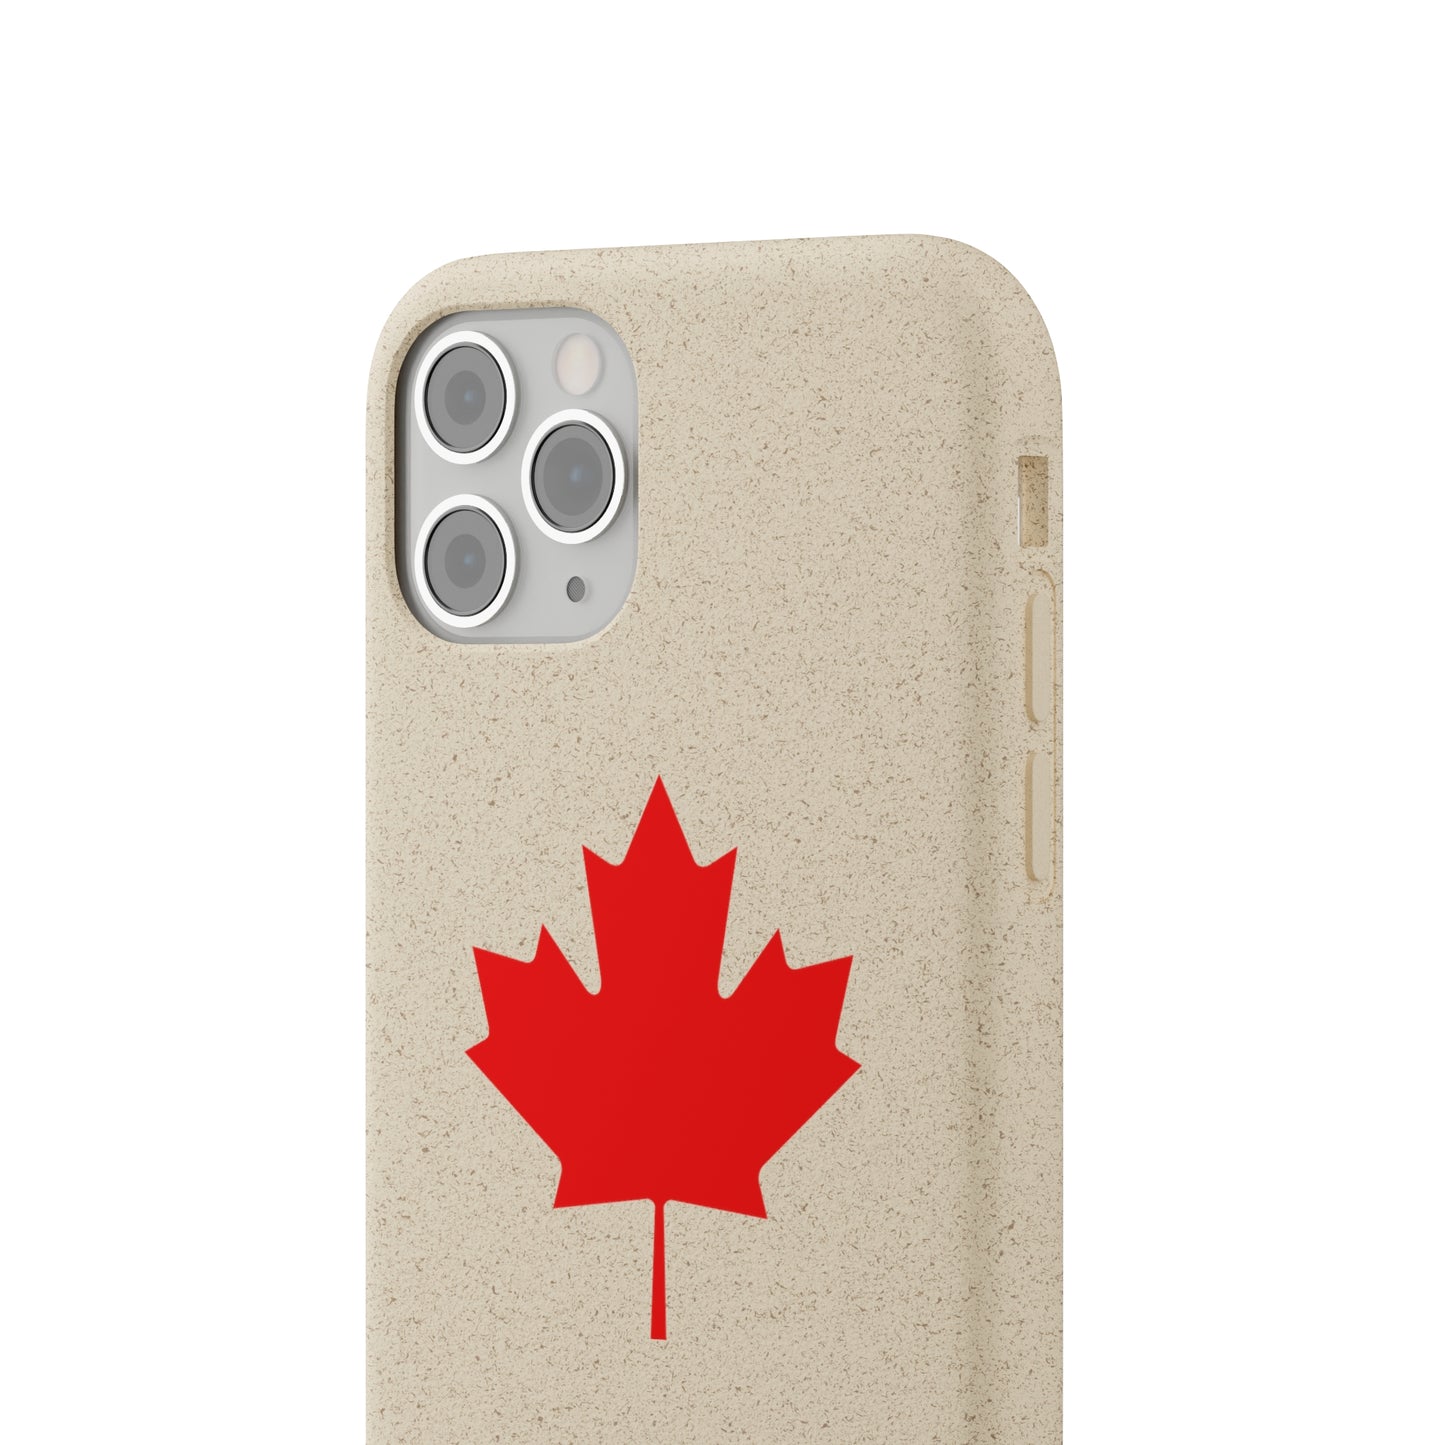 Biodegradable Cases, Canadian Maple Leaf